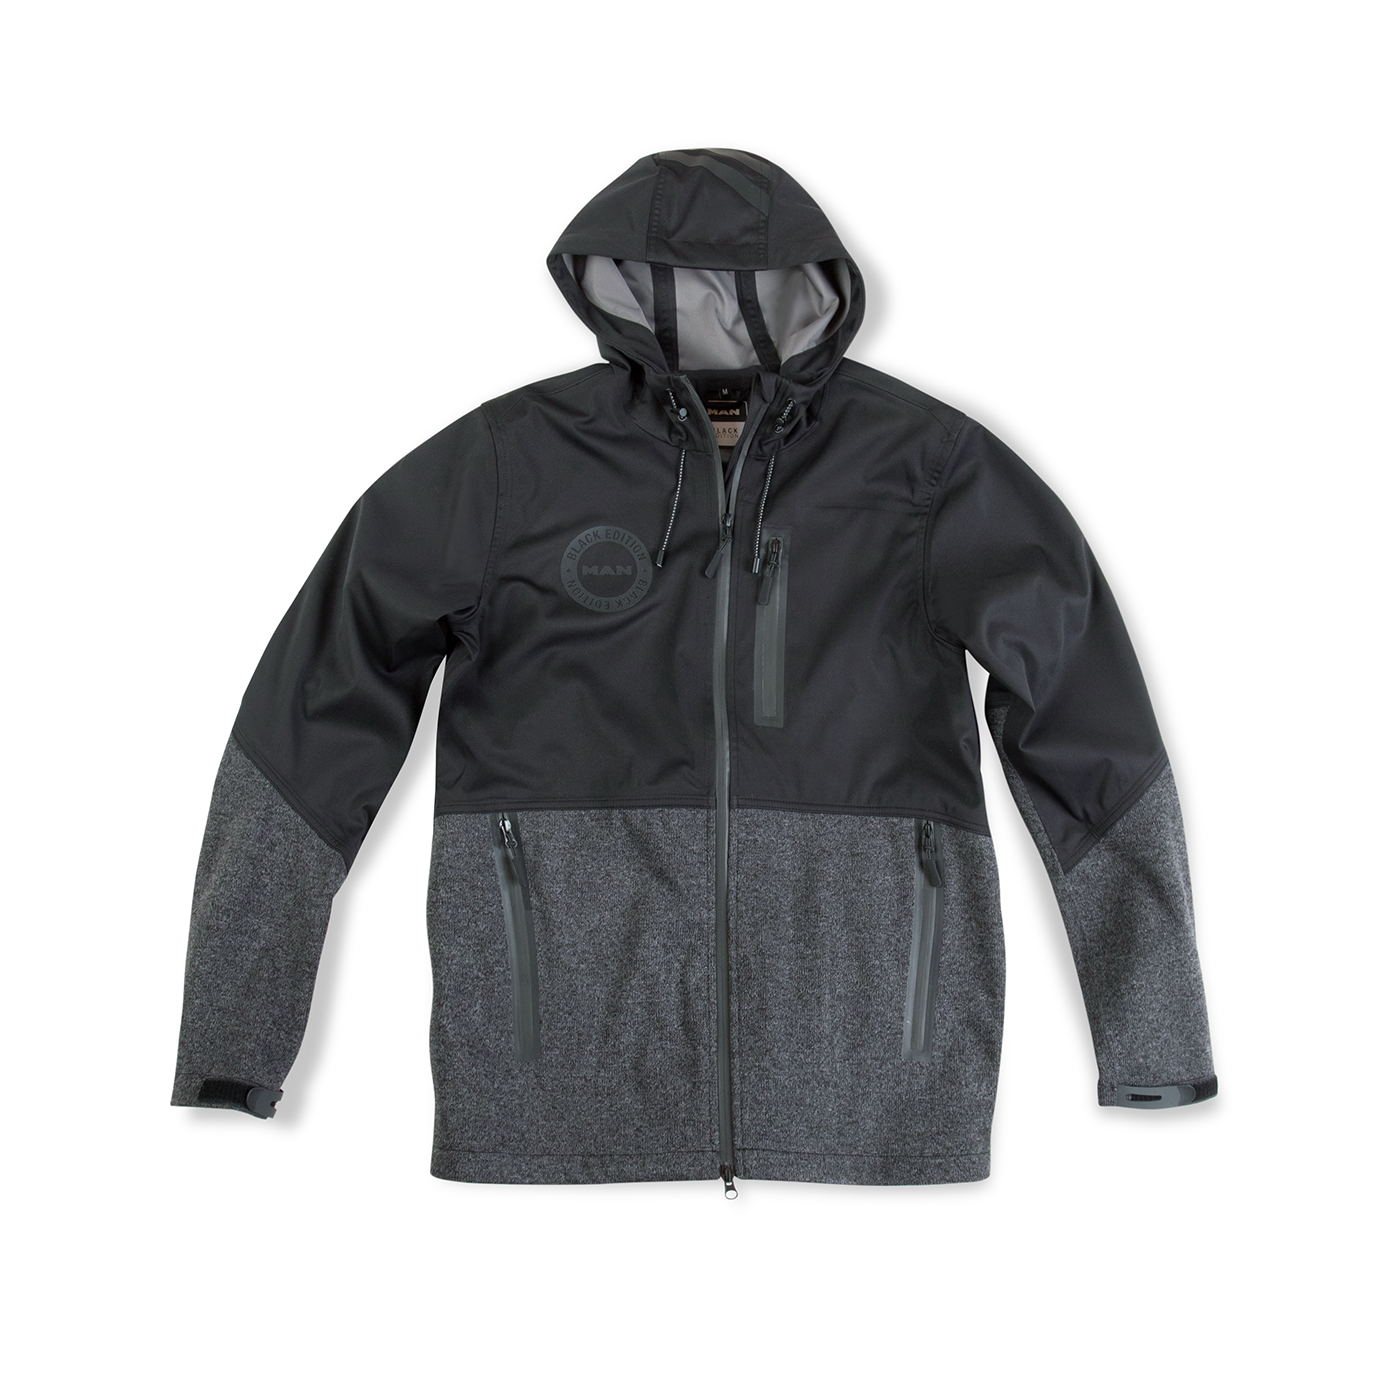 MAN Black Edition Men's Tec softshell jacket